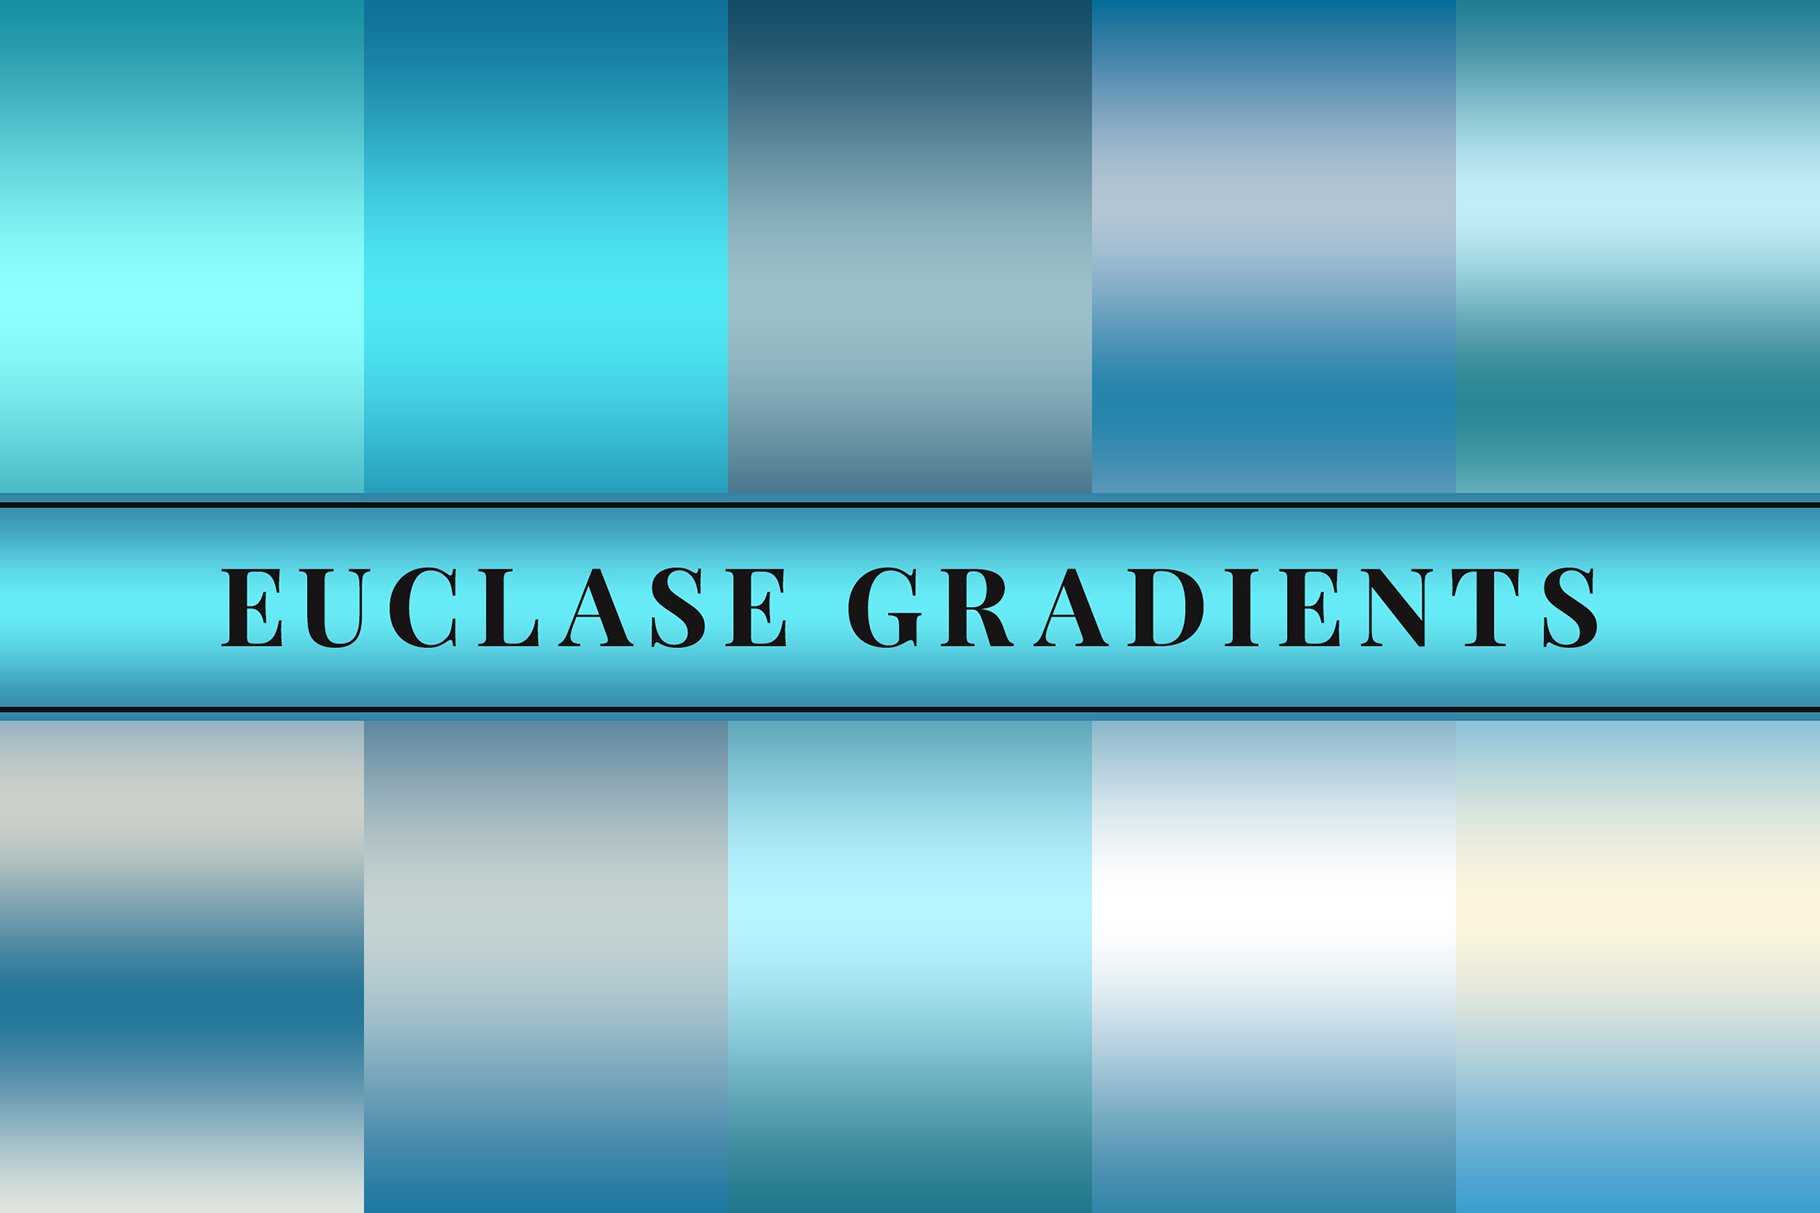 Euclase Gradients cover image.